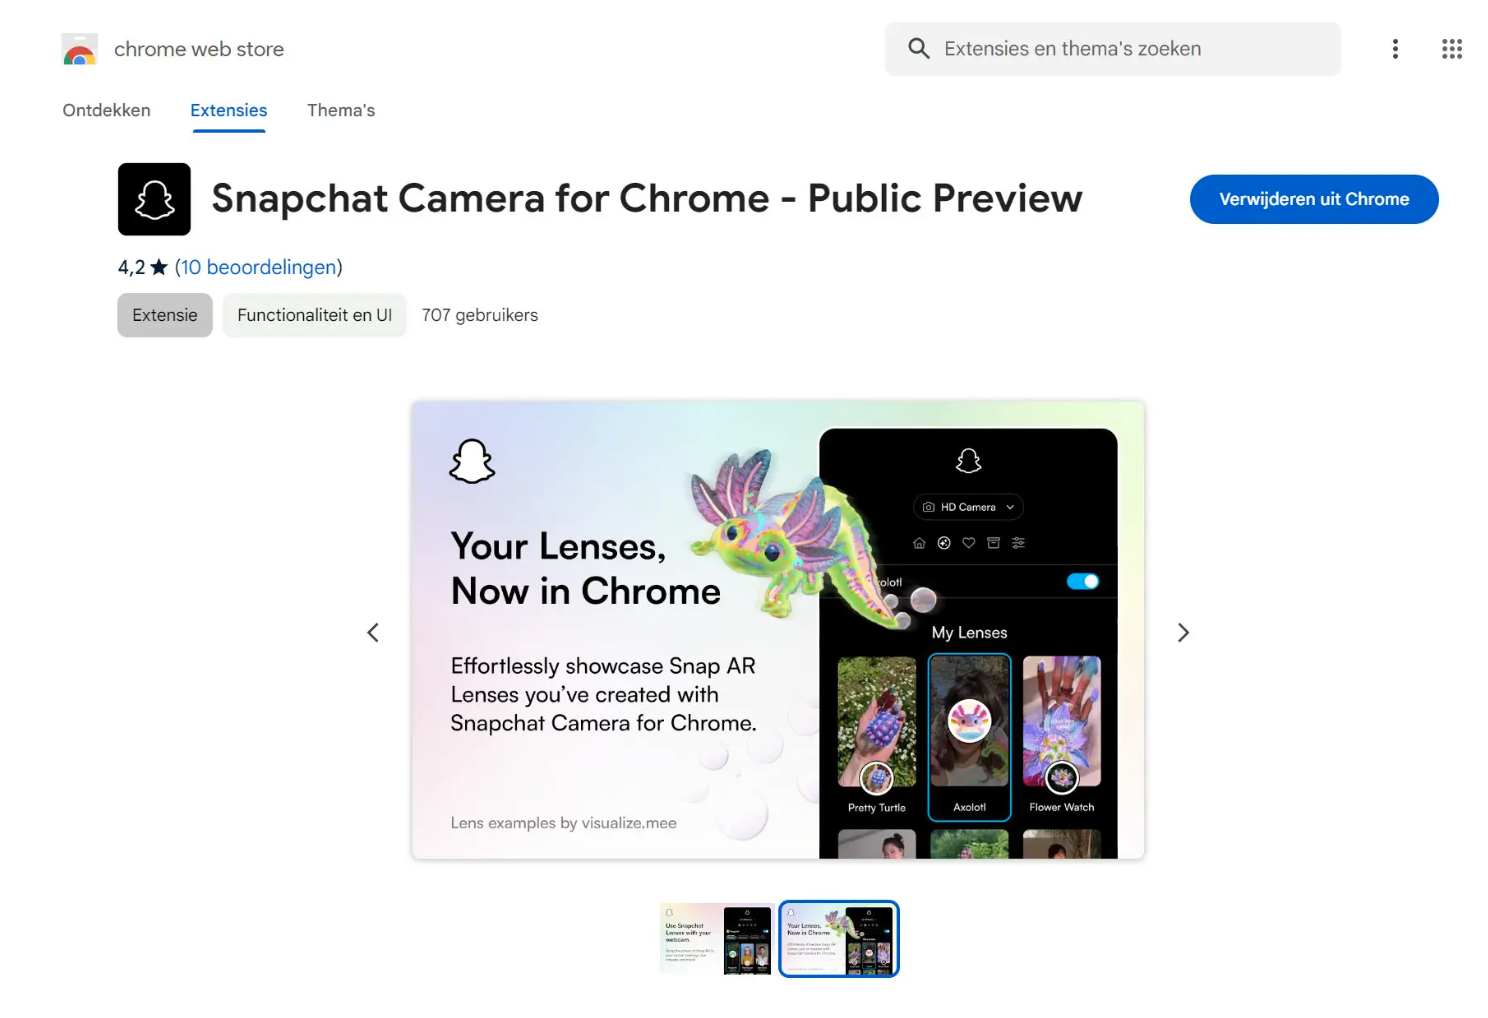 Snapchat Camera for Chrome